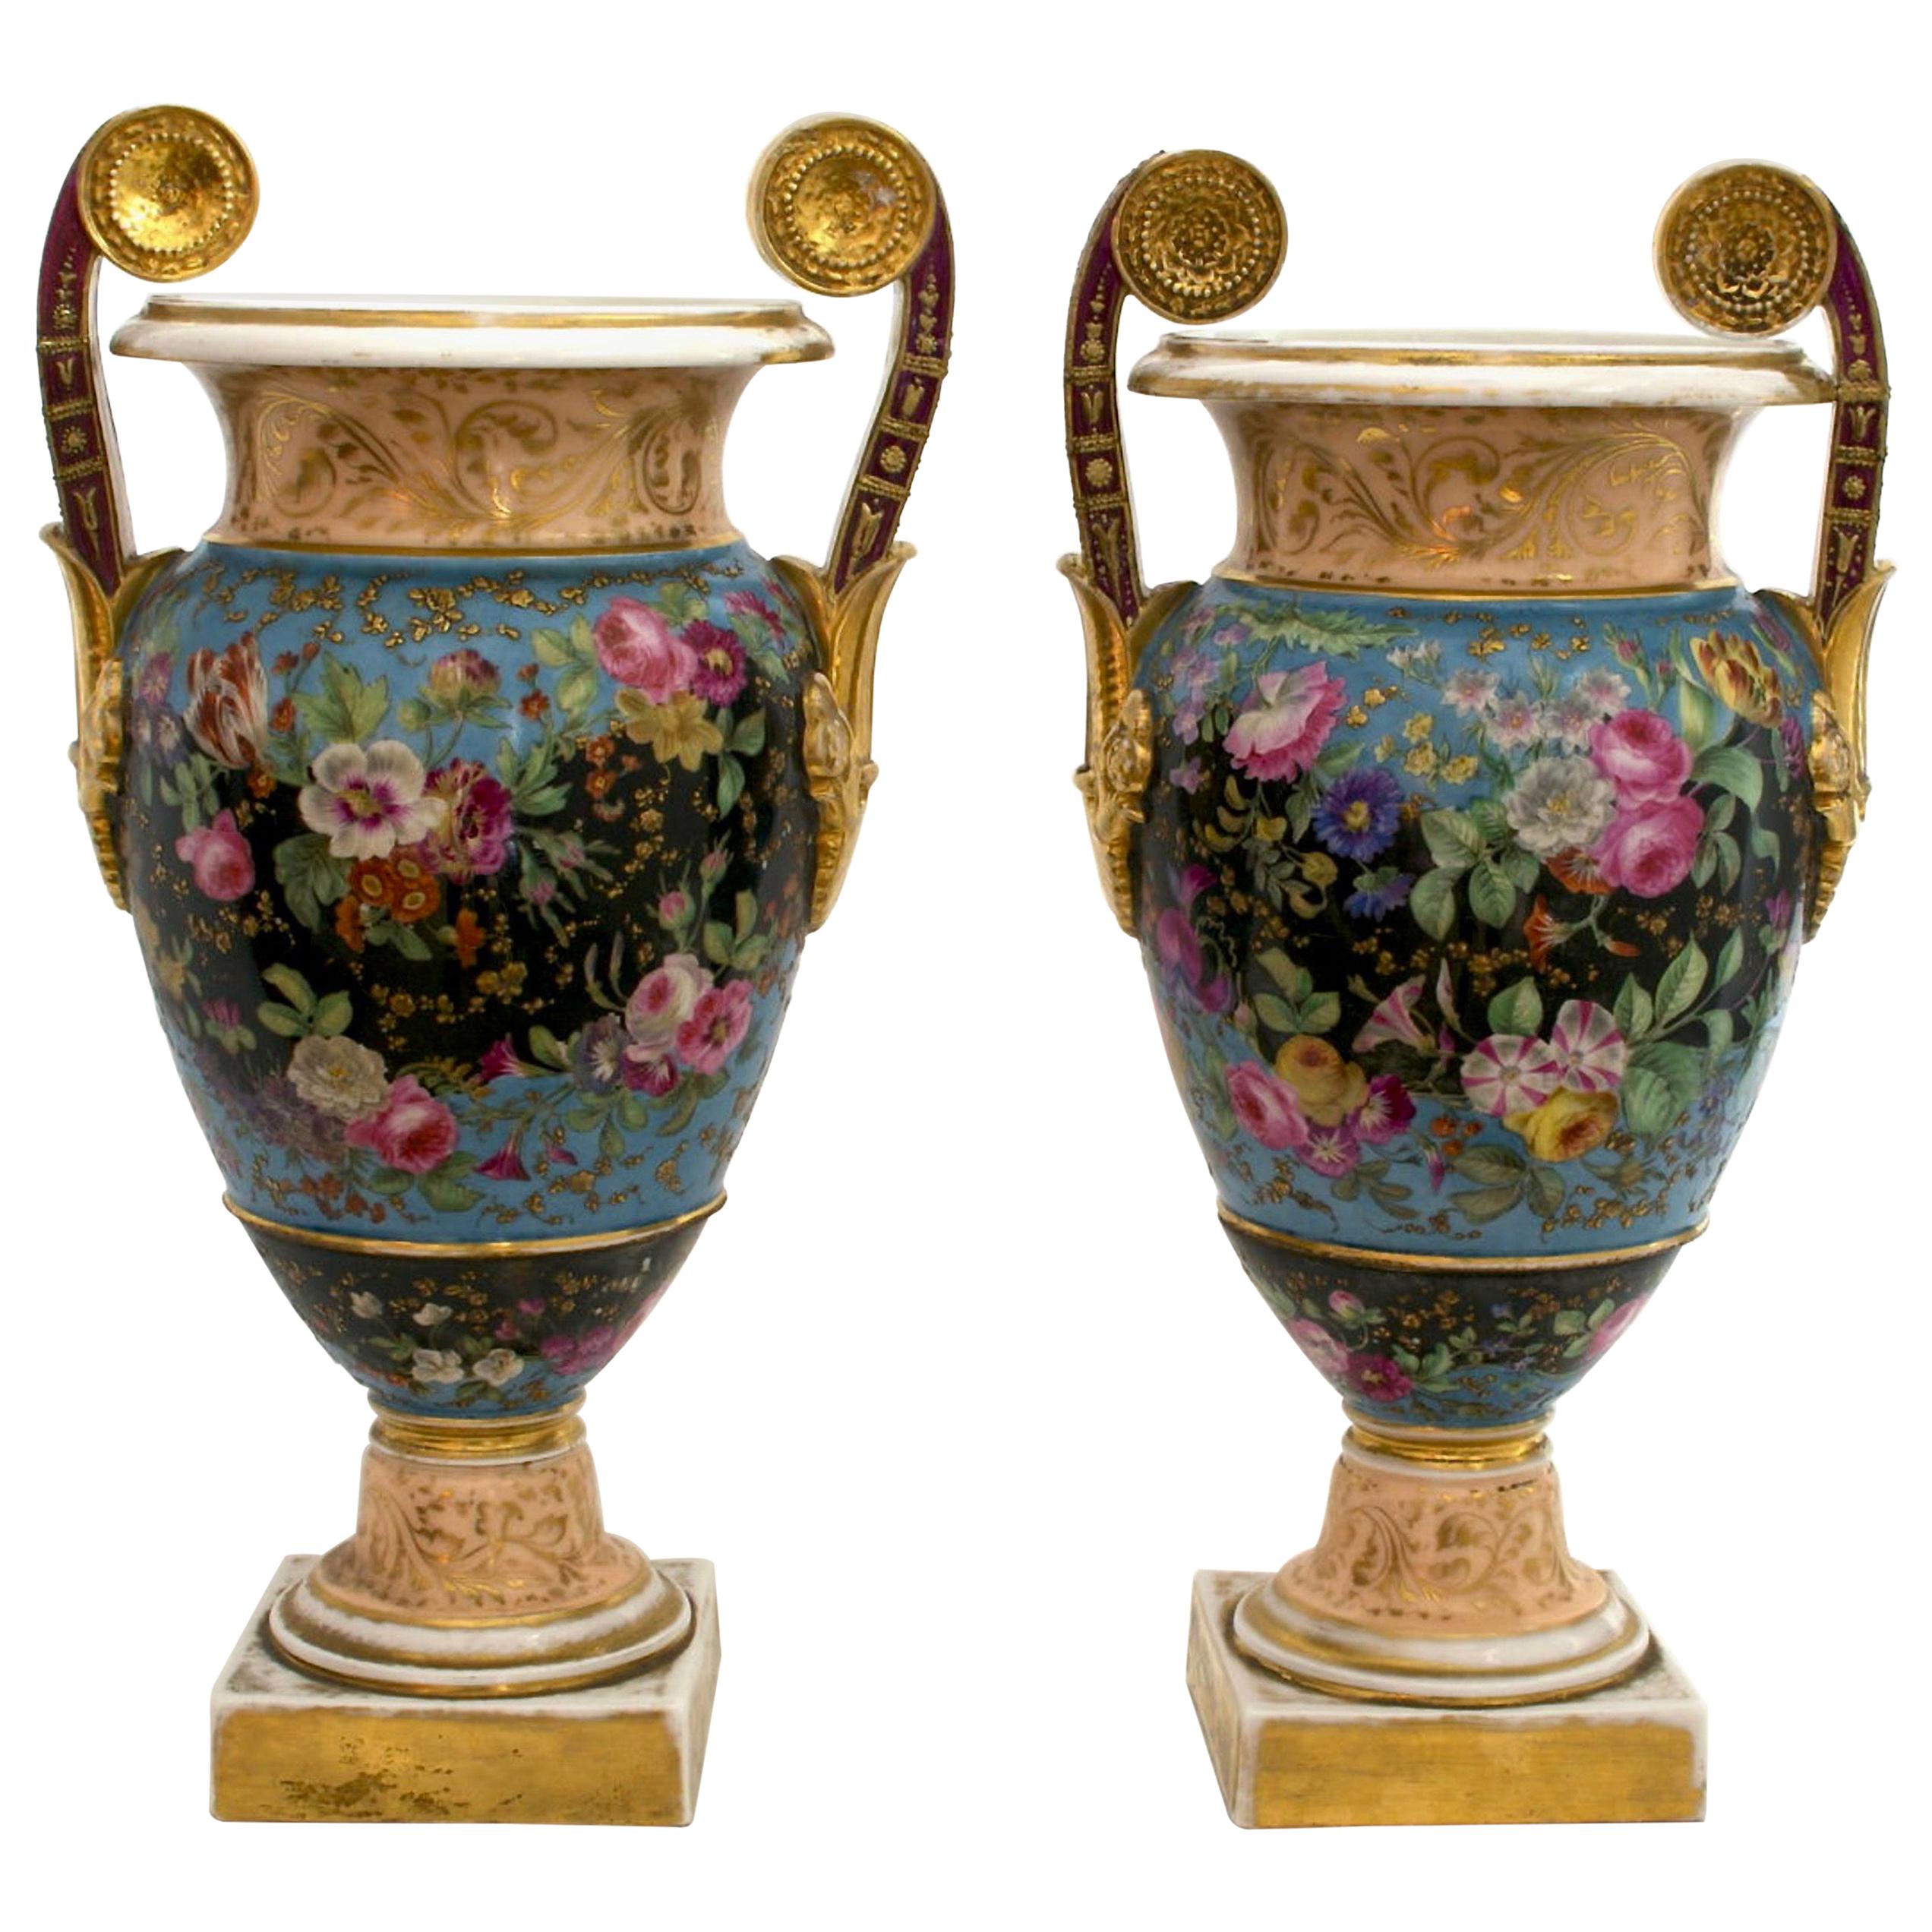 Pair of Porcelain Urns, Empire circa 1800